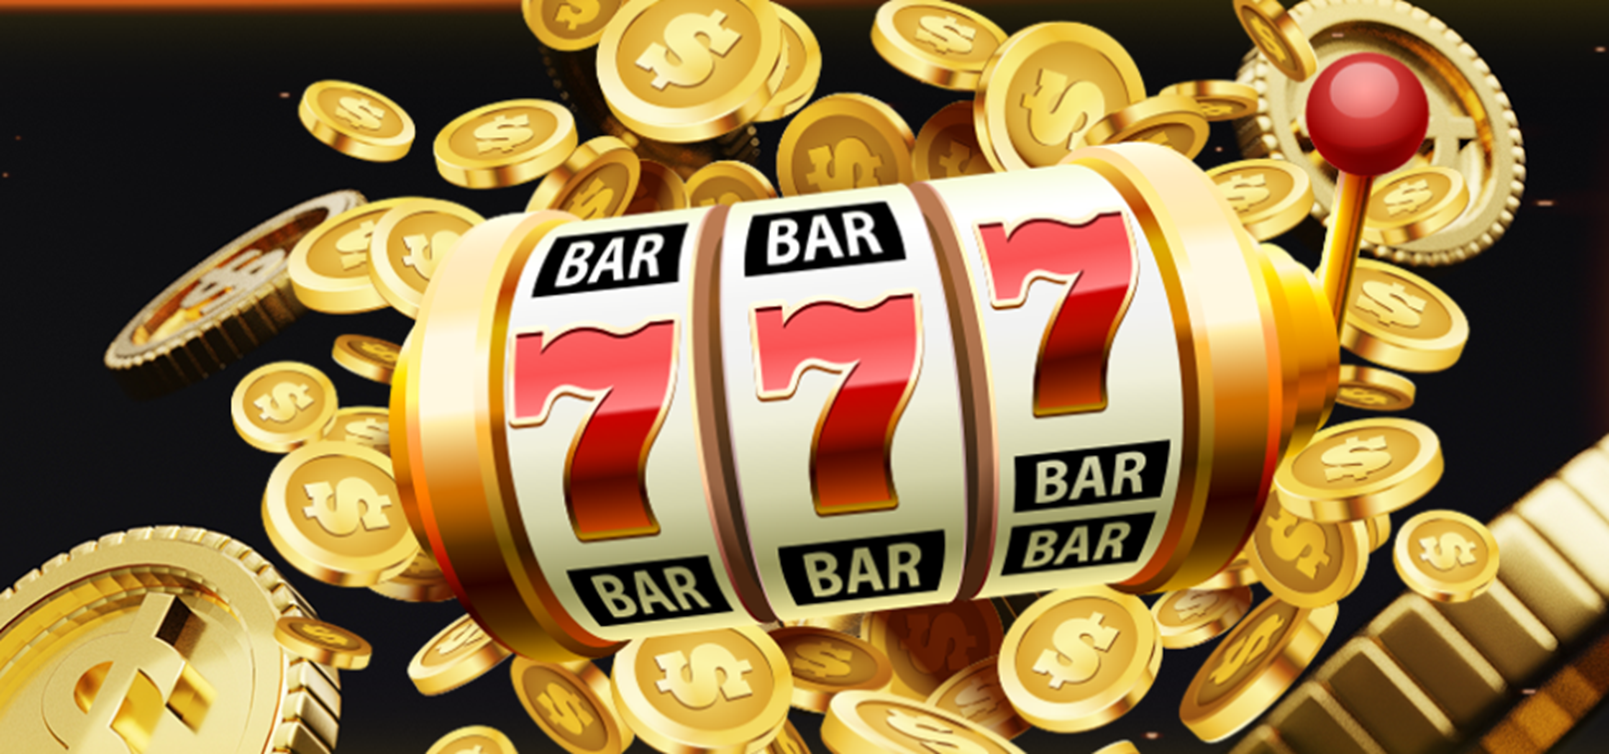 Real Money Gambling Site in Singapore